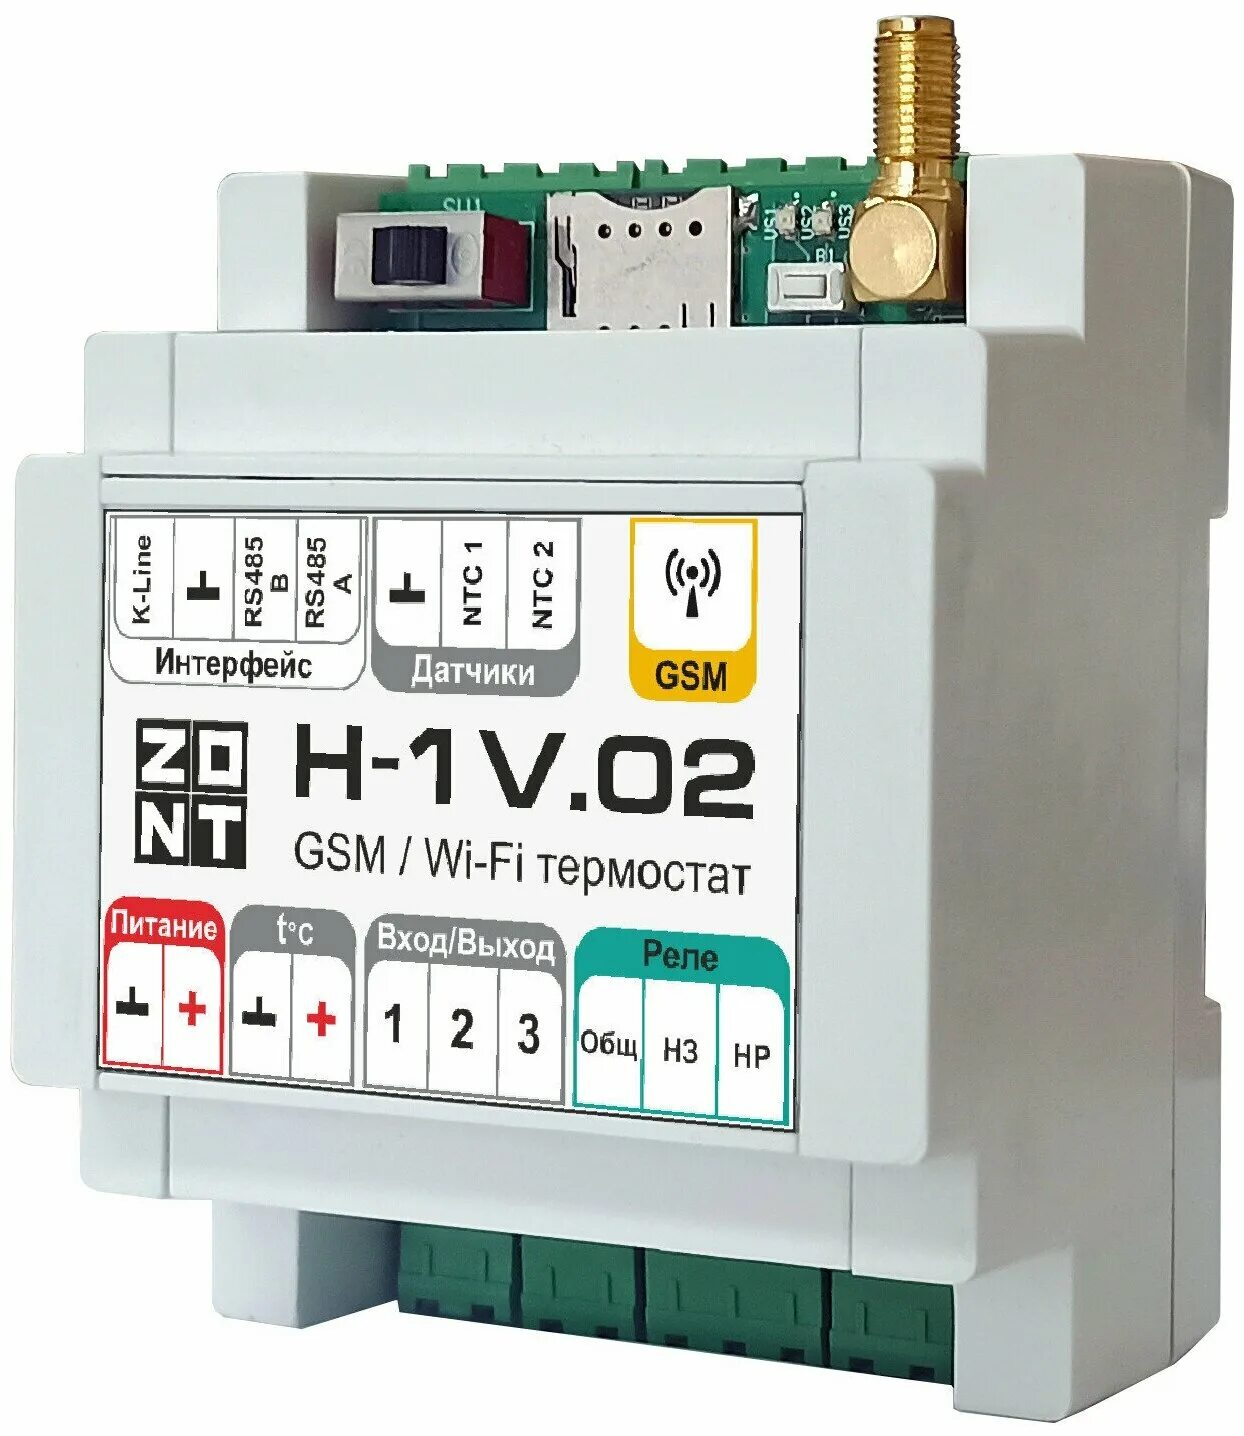 Котлов zont h 1v. Термостат Zont h-1v New (GSM, Wi-Fi, din). Термостат Zont h-1v.02. Zont h-1v New. Термостат Zont h-1v New GSM/WIFI на din-рейку.